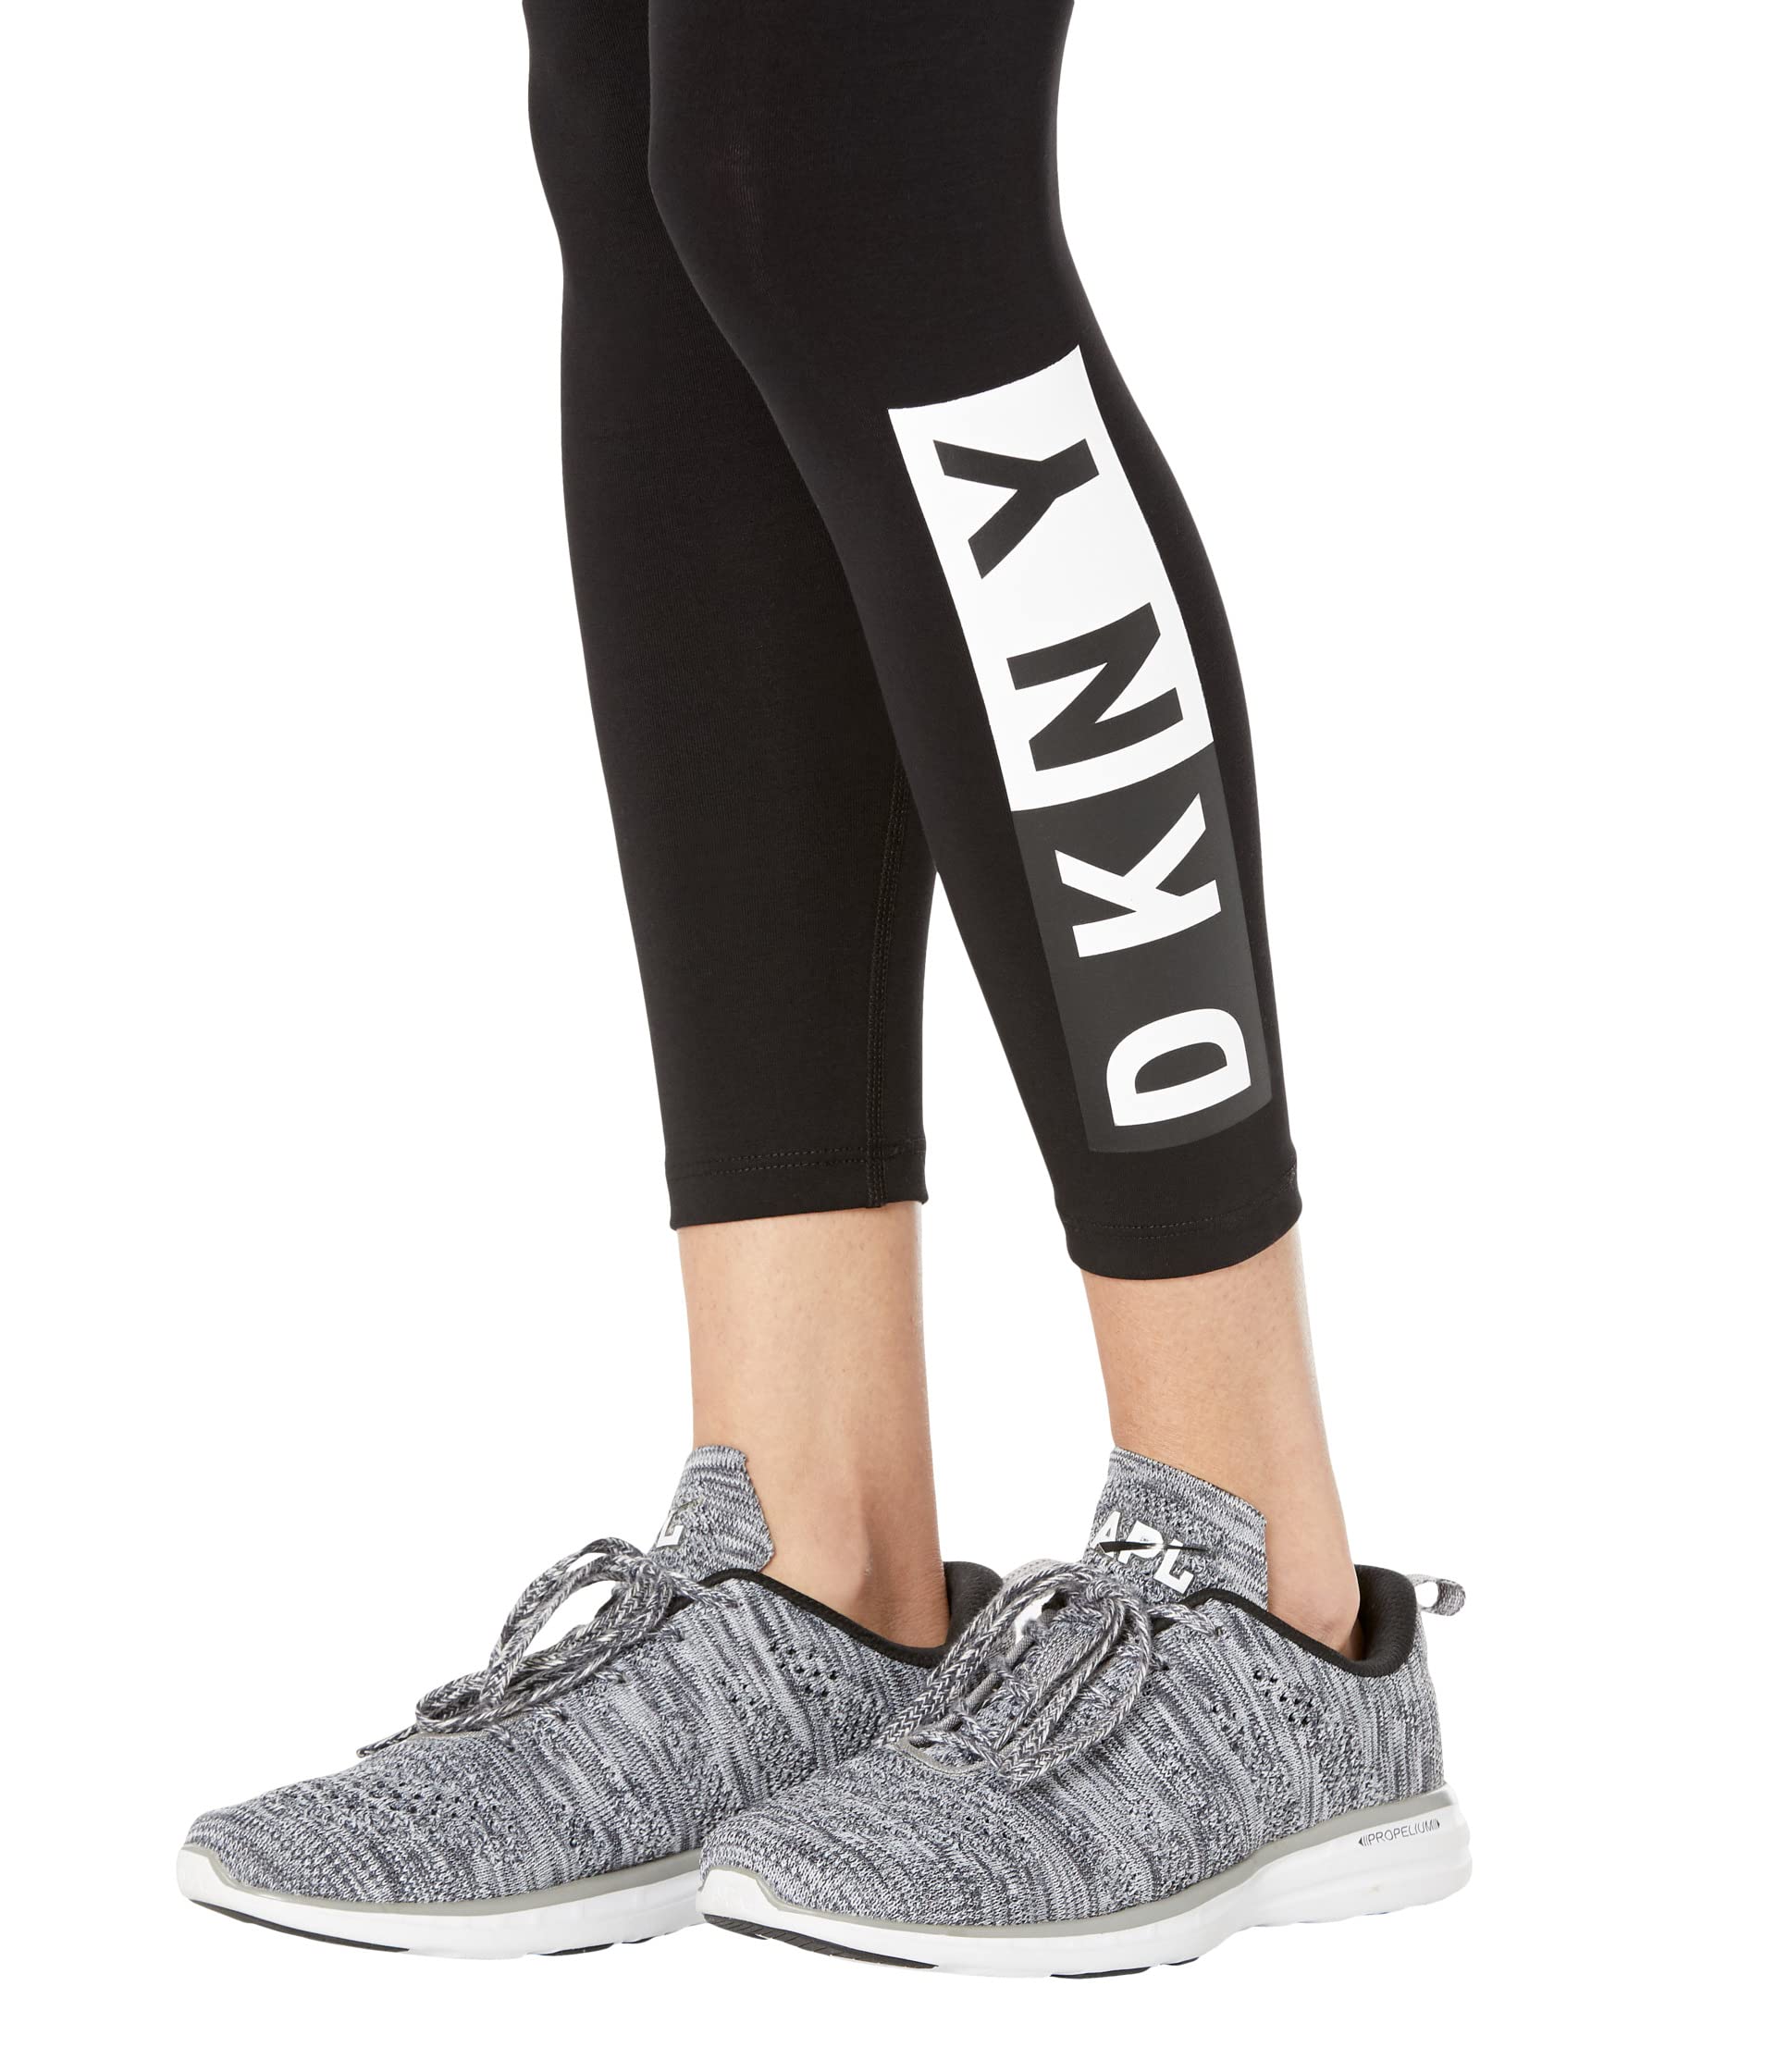 DKNY Women's Tummy Control Workout Yoga Leggings